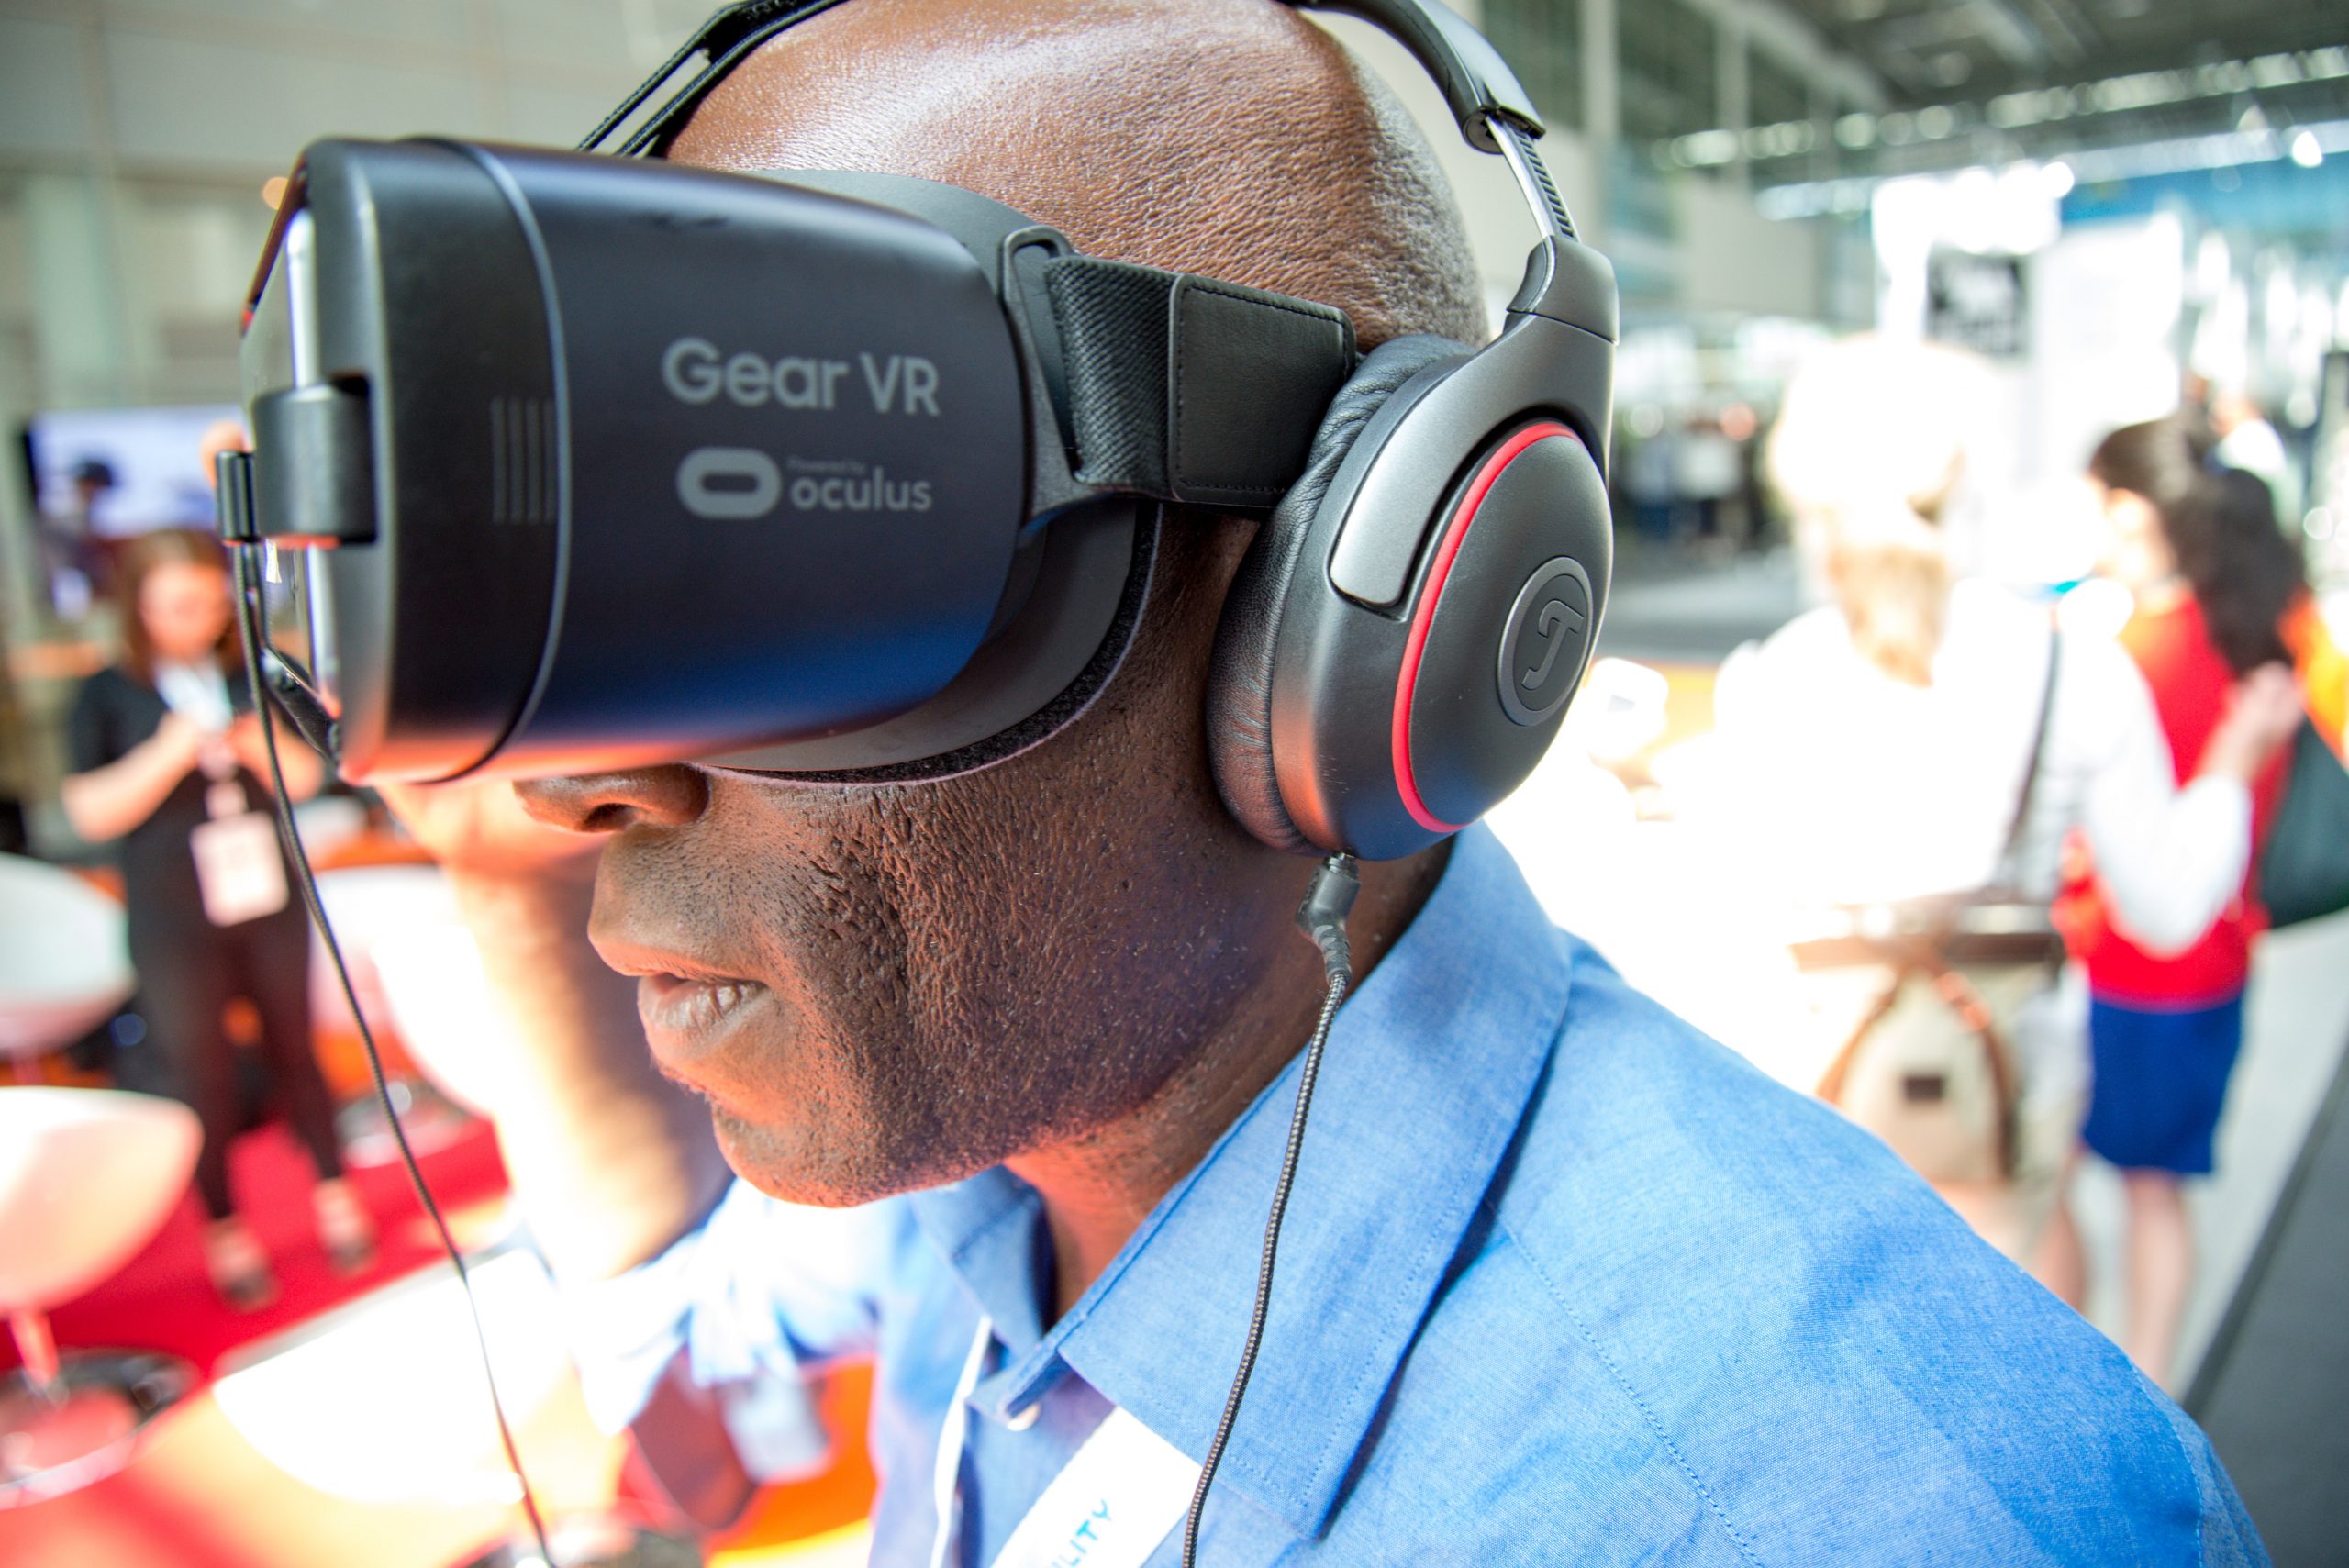 Man wearing headphones and VR googles